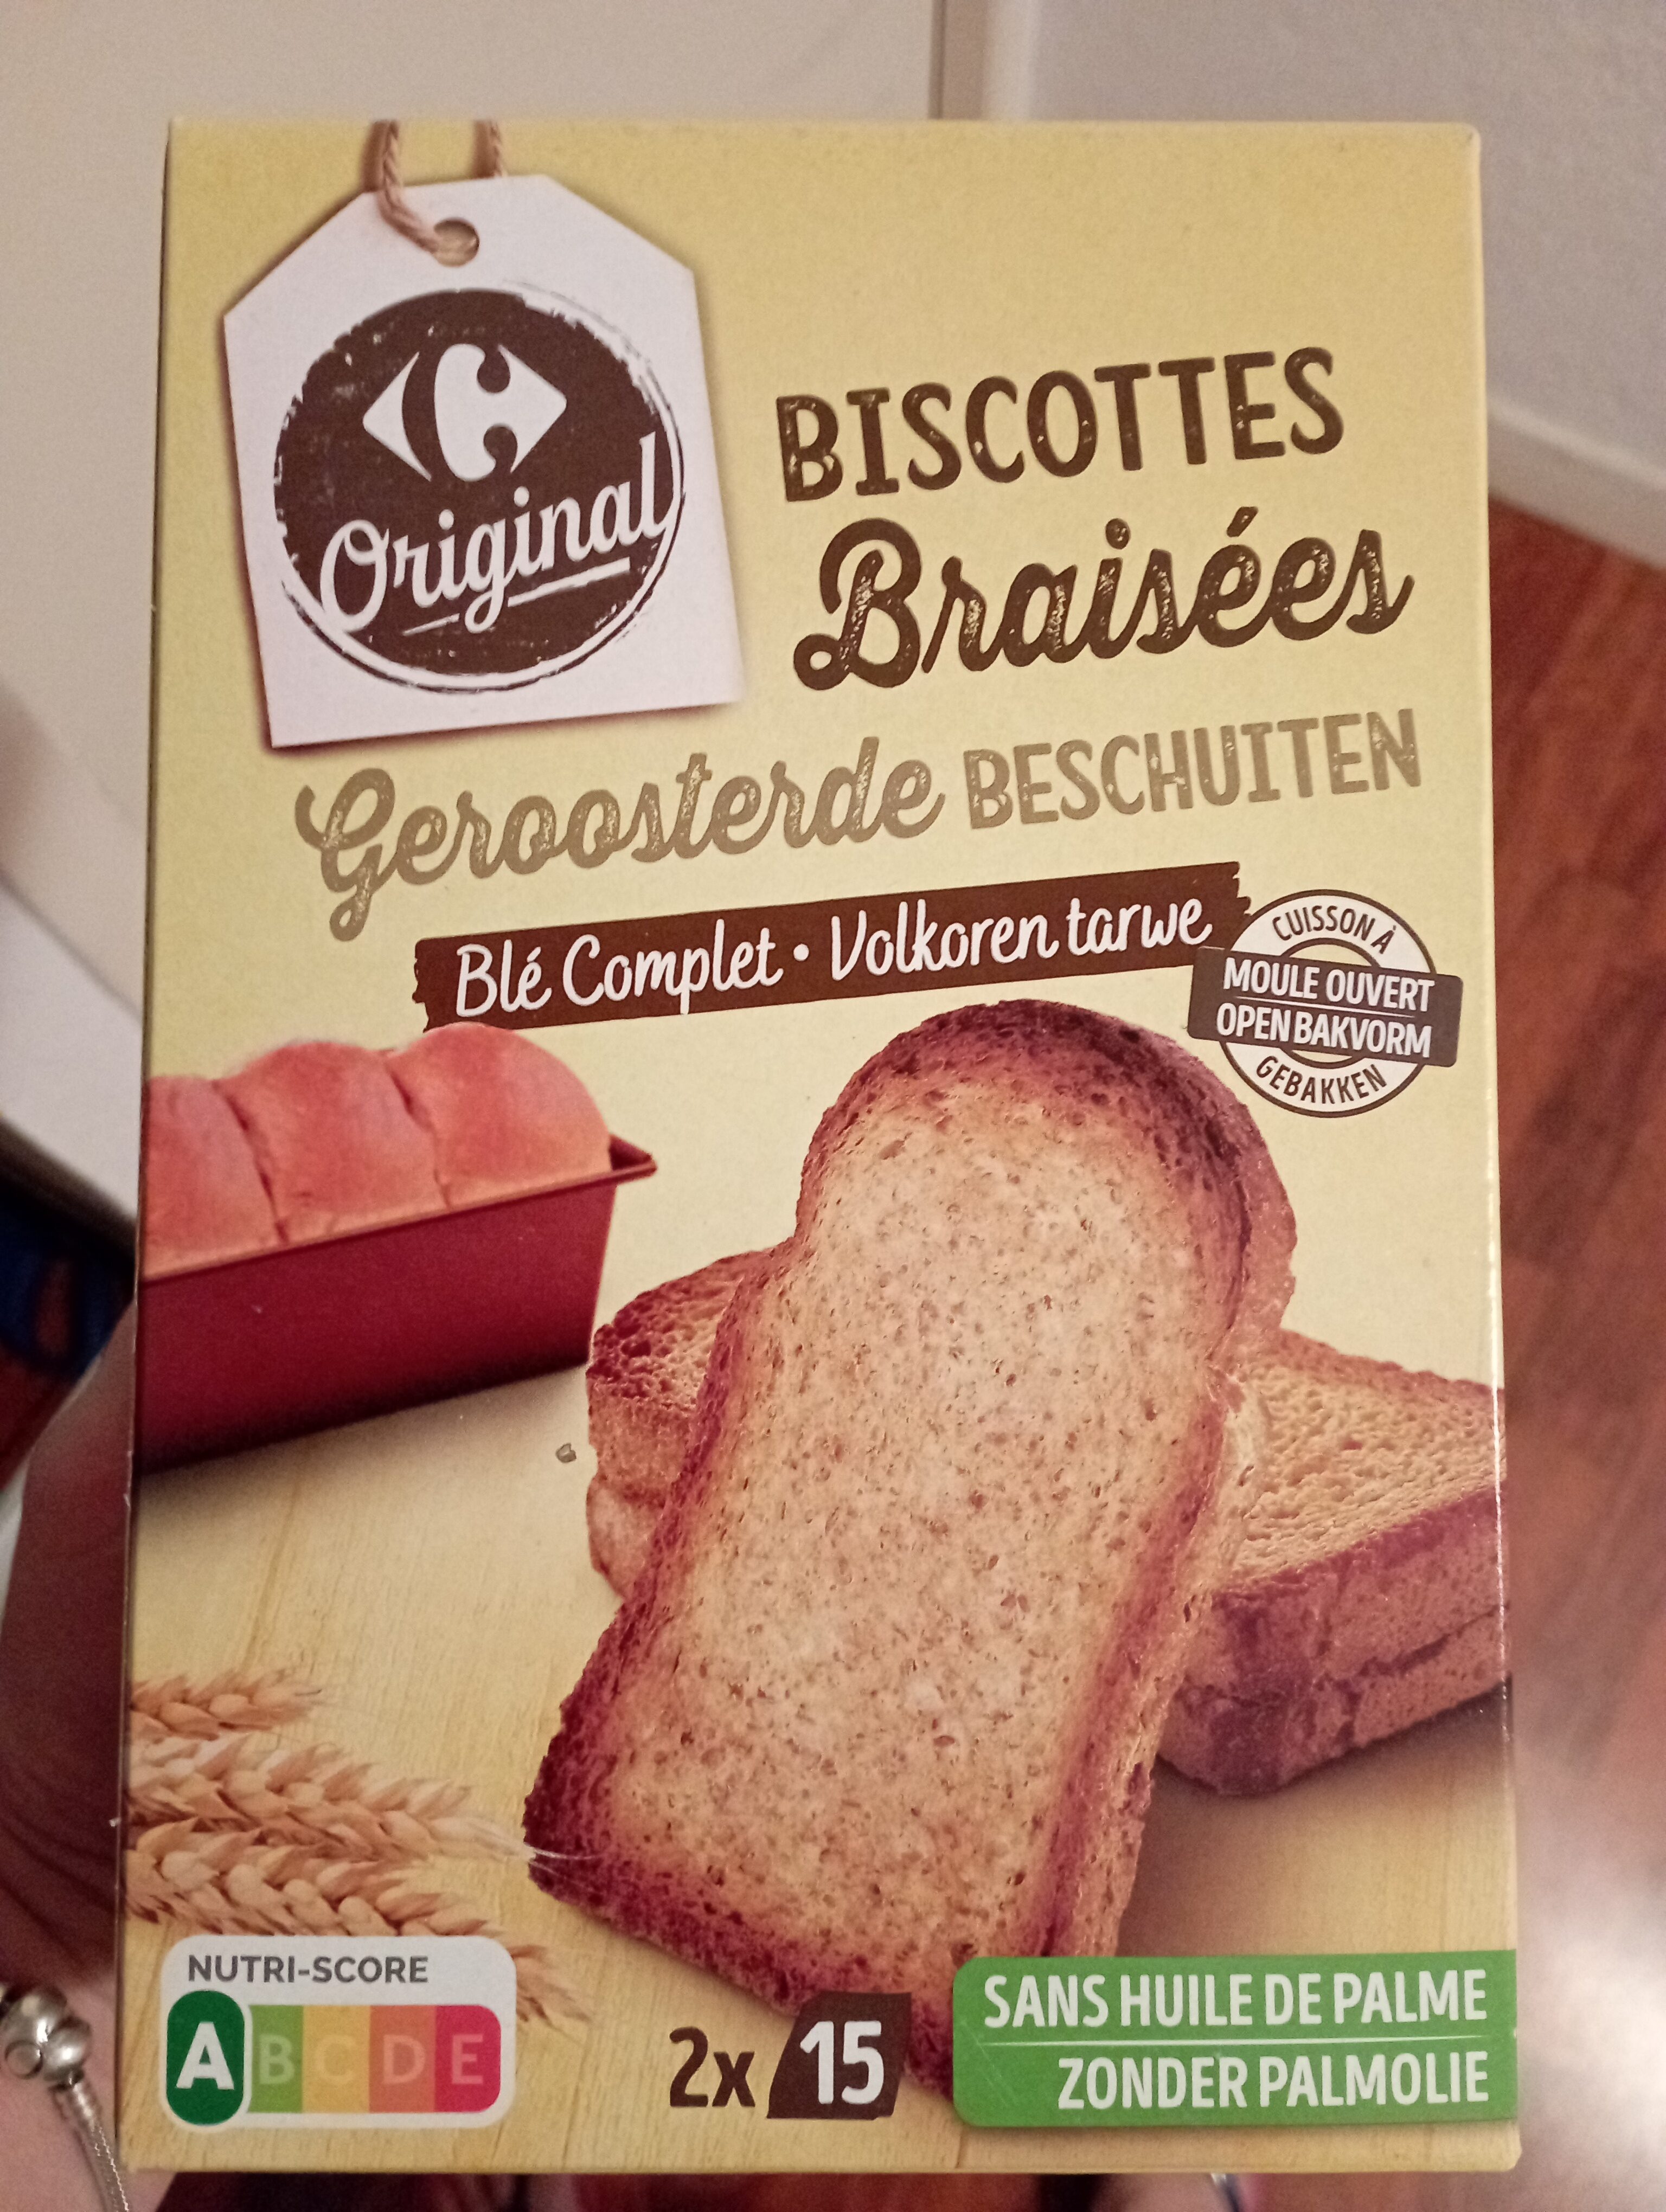 Biscottes braisées farine complete - Prodotto - fr